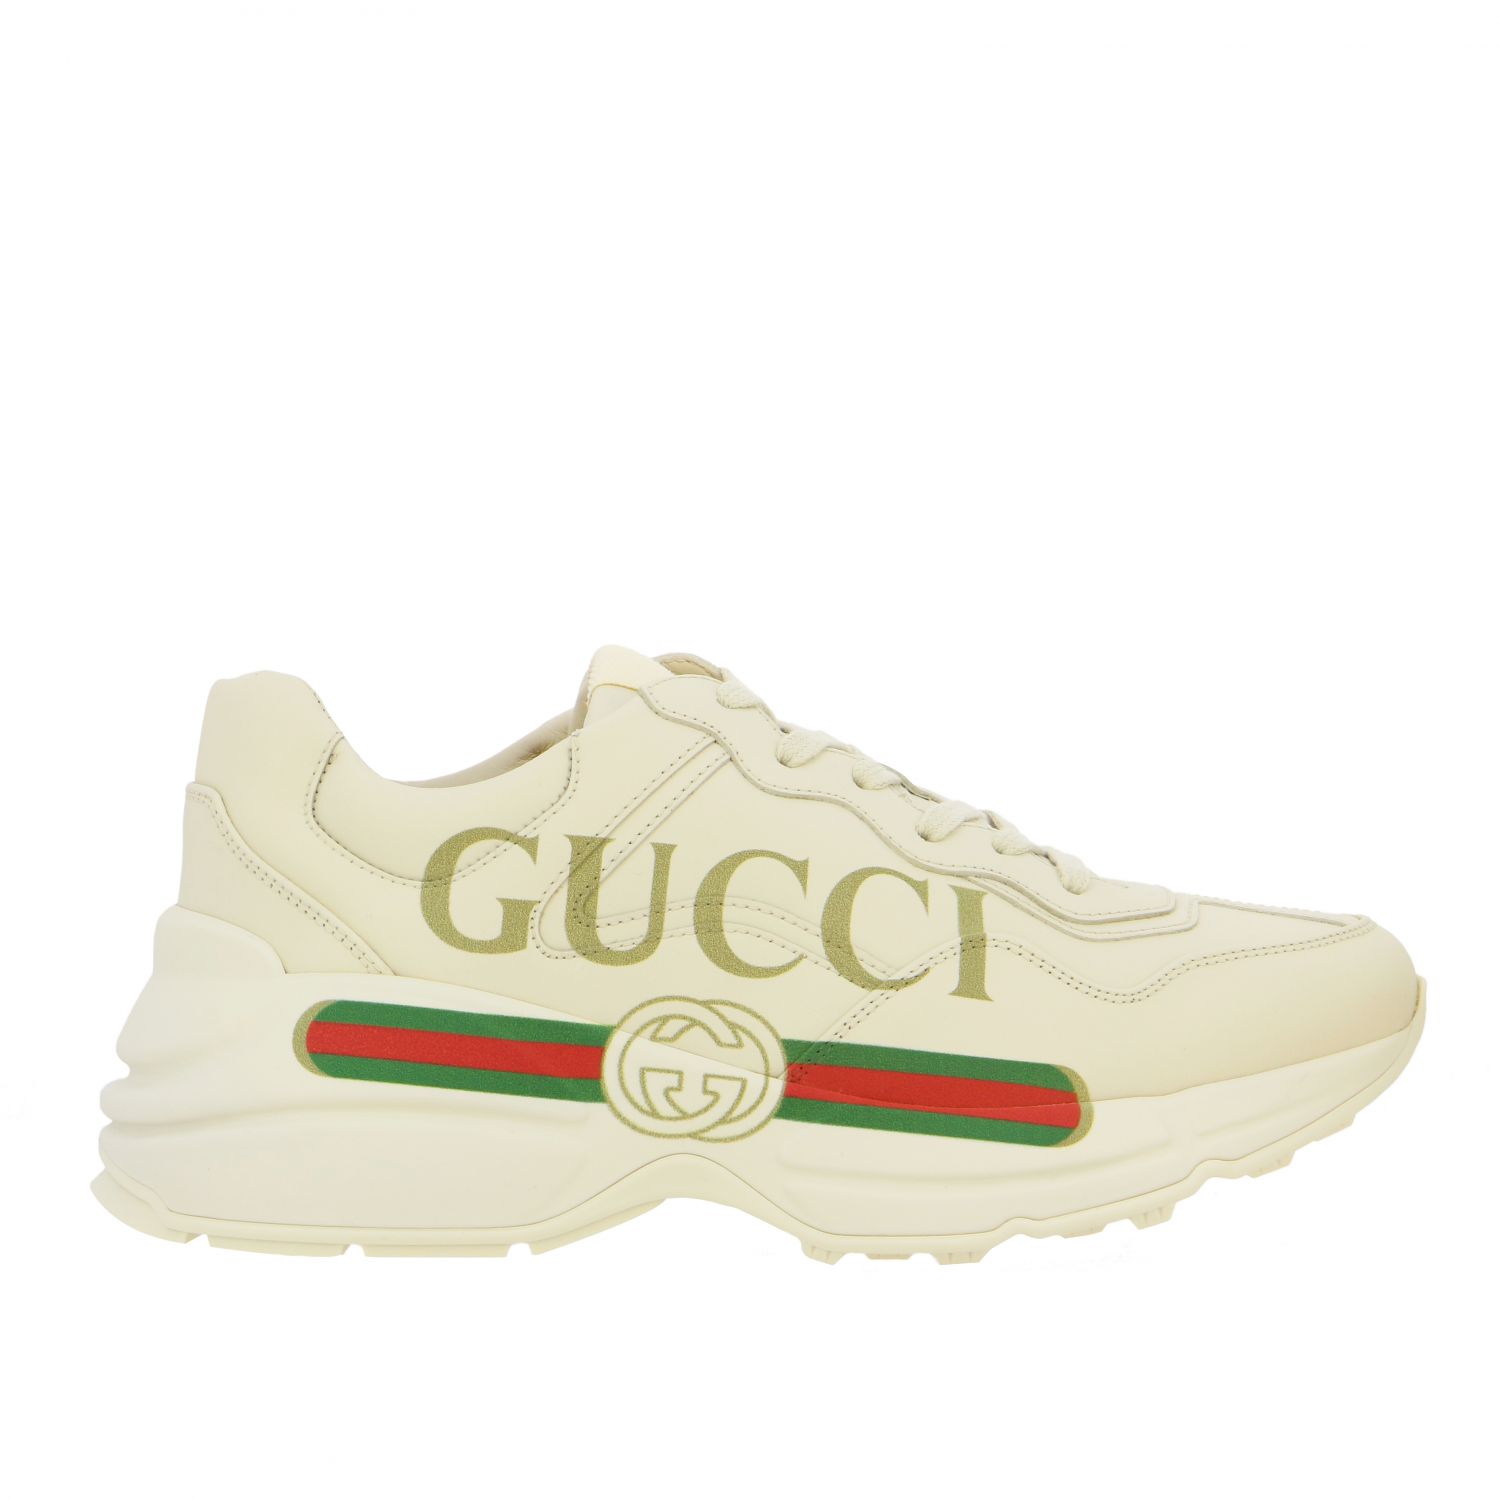 gucci sneakers women white